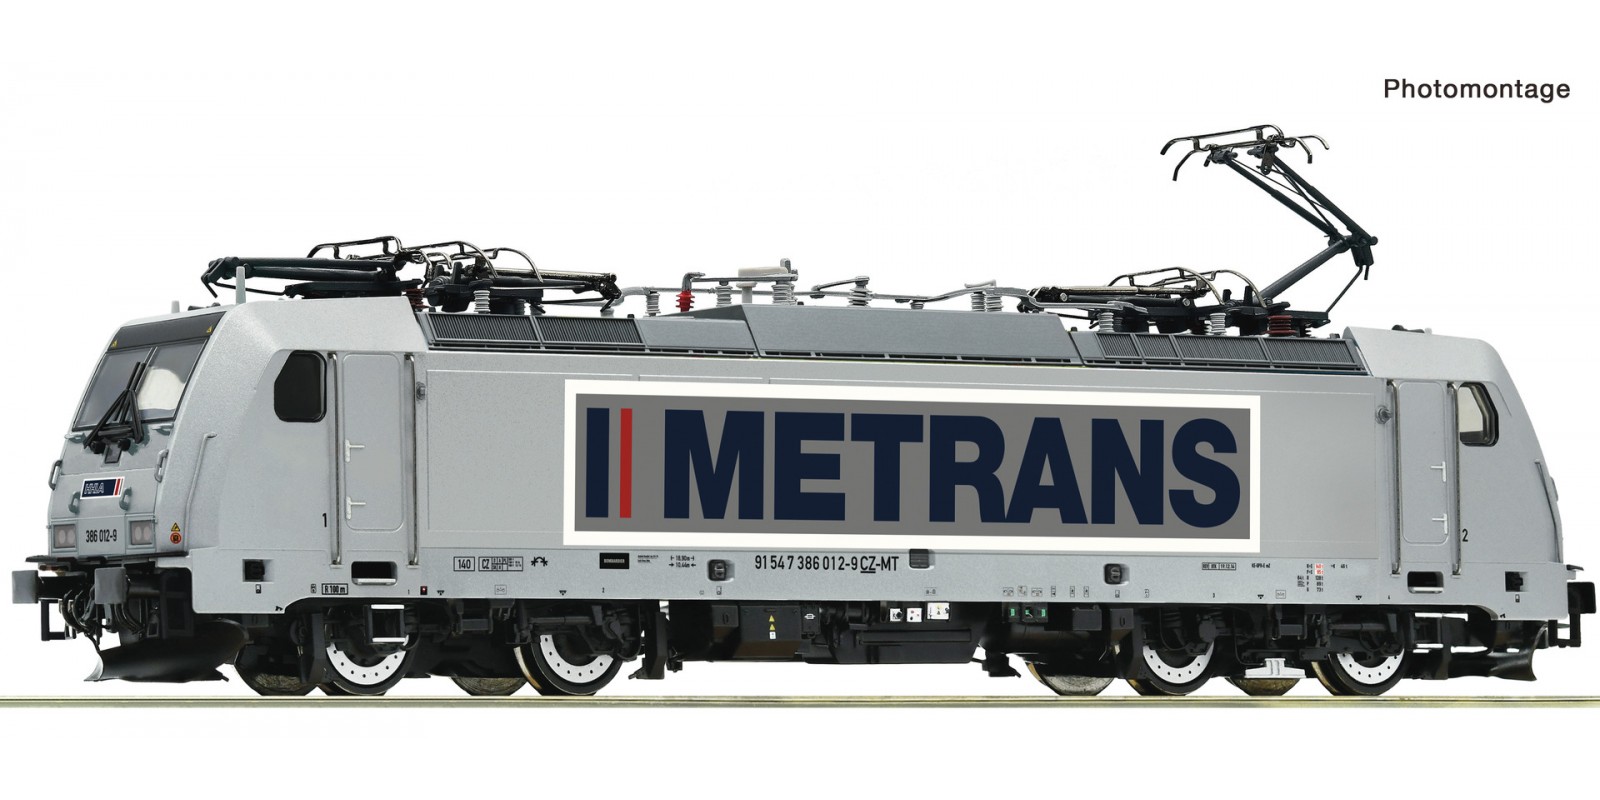 RO7520016 Electric locomotive 386 0 12-9, Metrans            